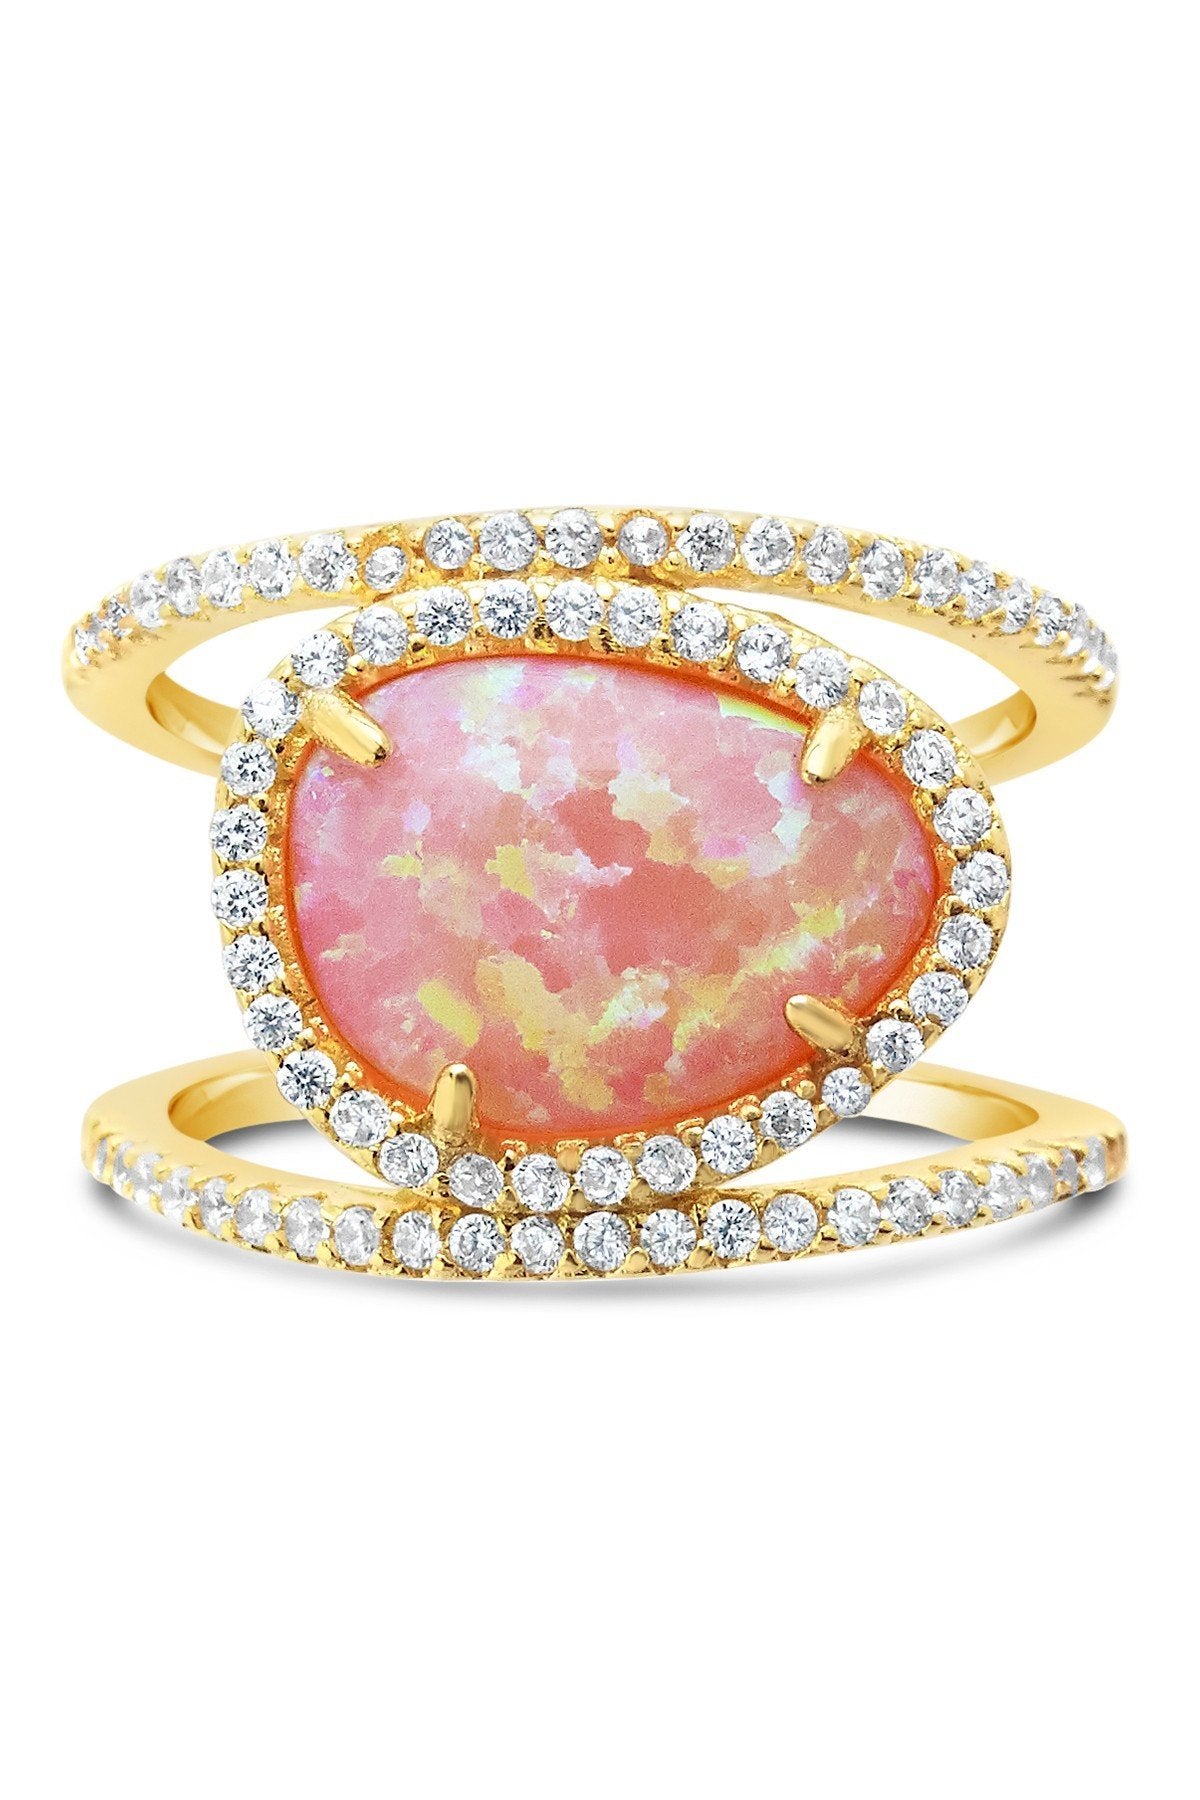 14K Gold Vermeil Created Opal Oval Gemstone Ring - Sterling Forever